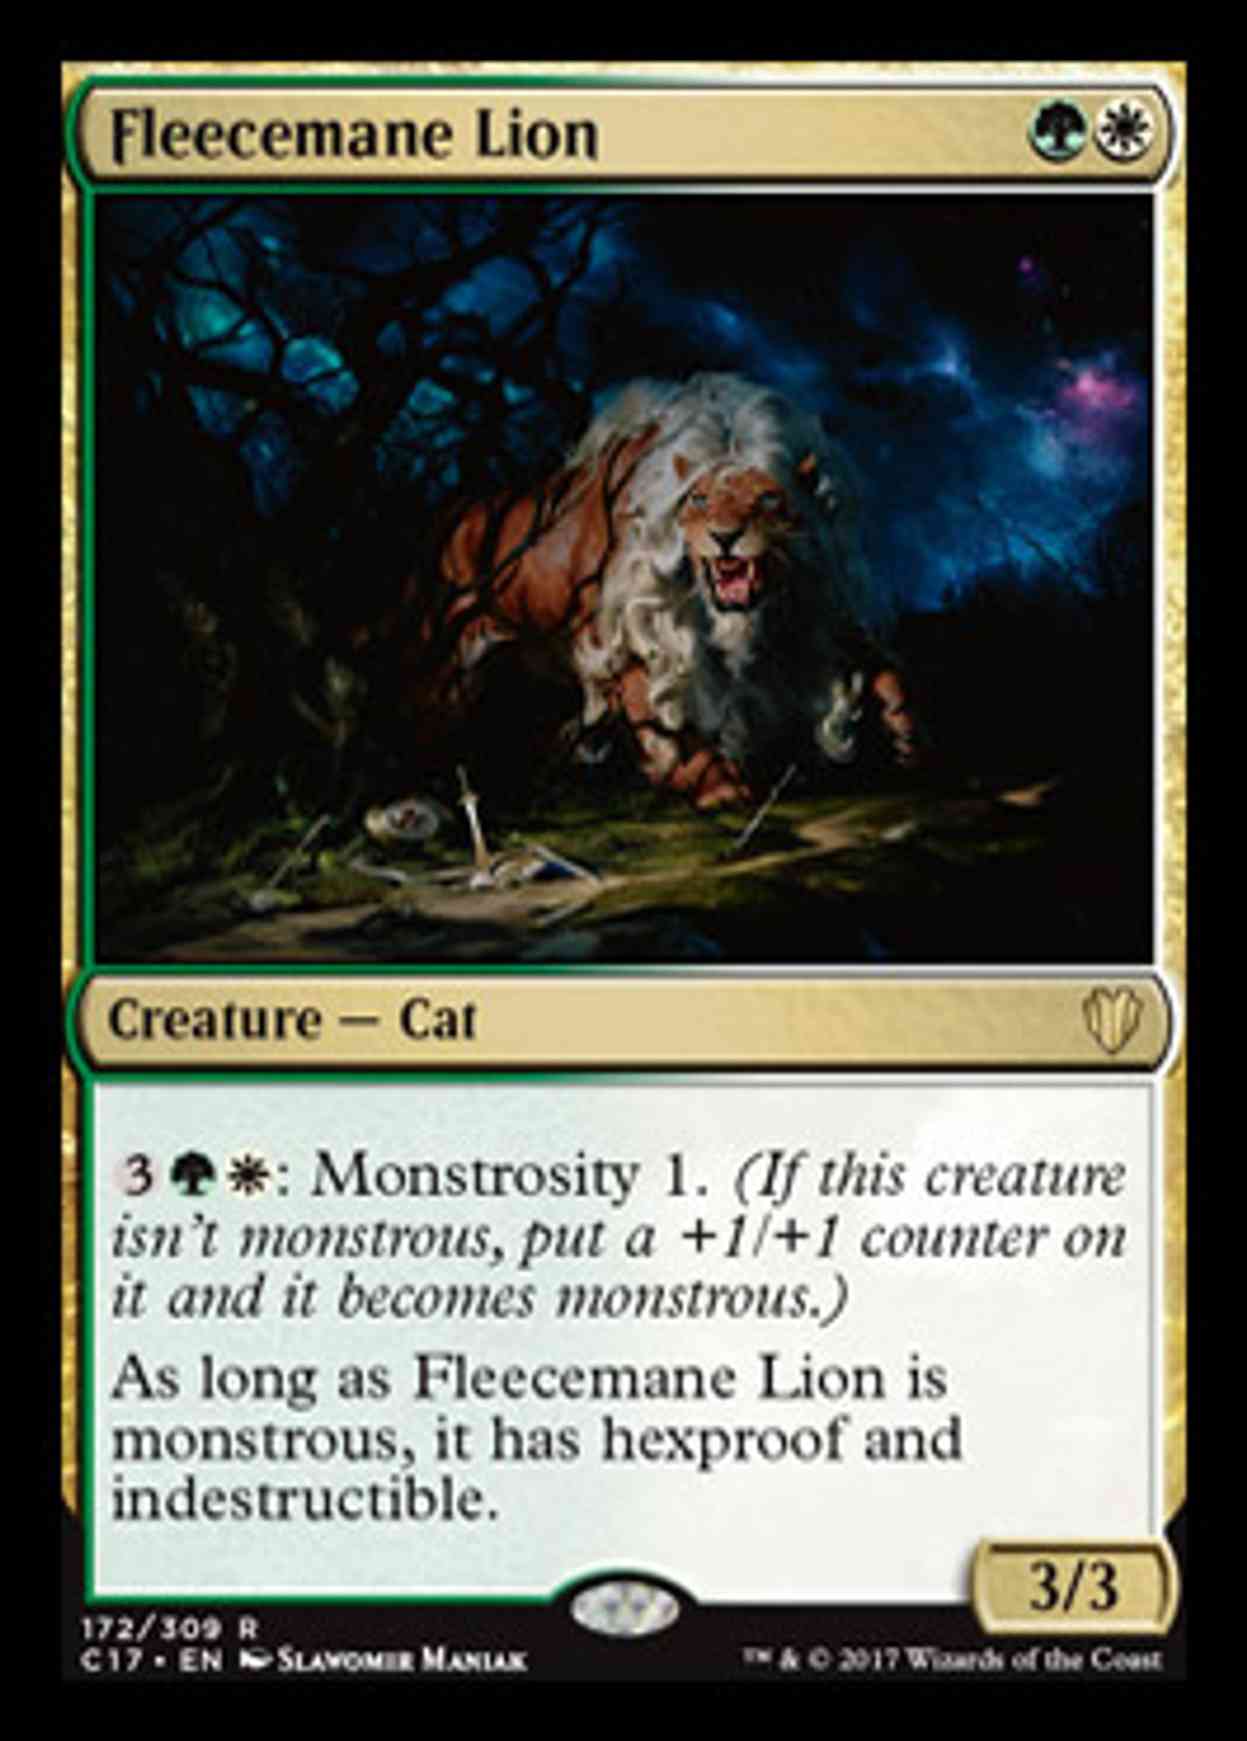 Fleecemane Lion magic card front